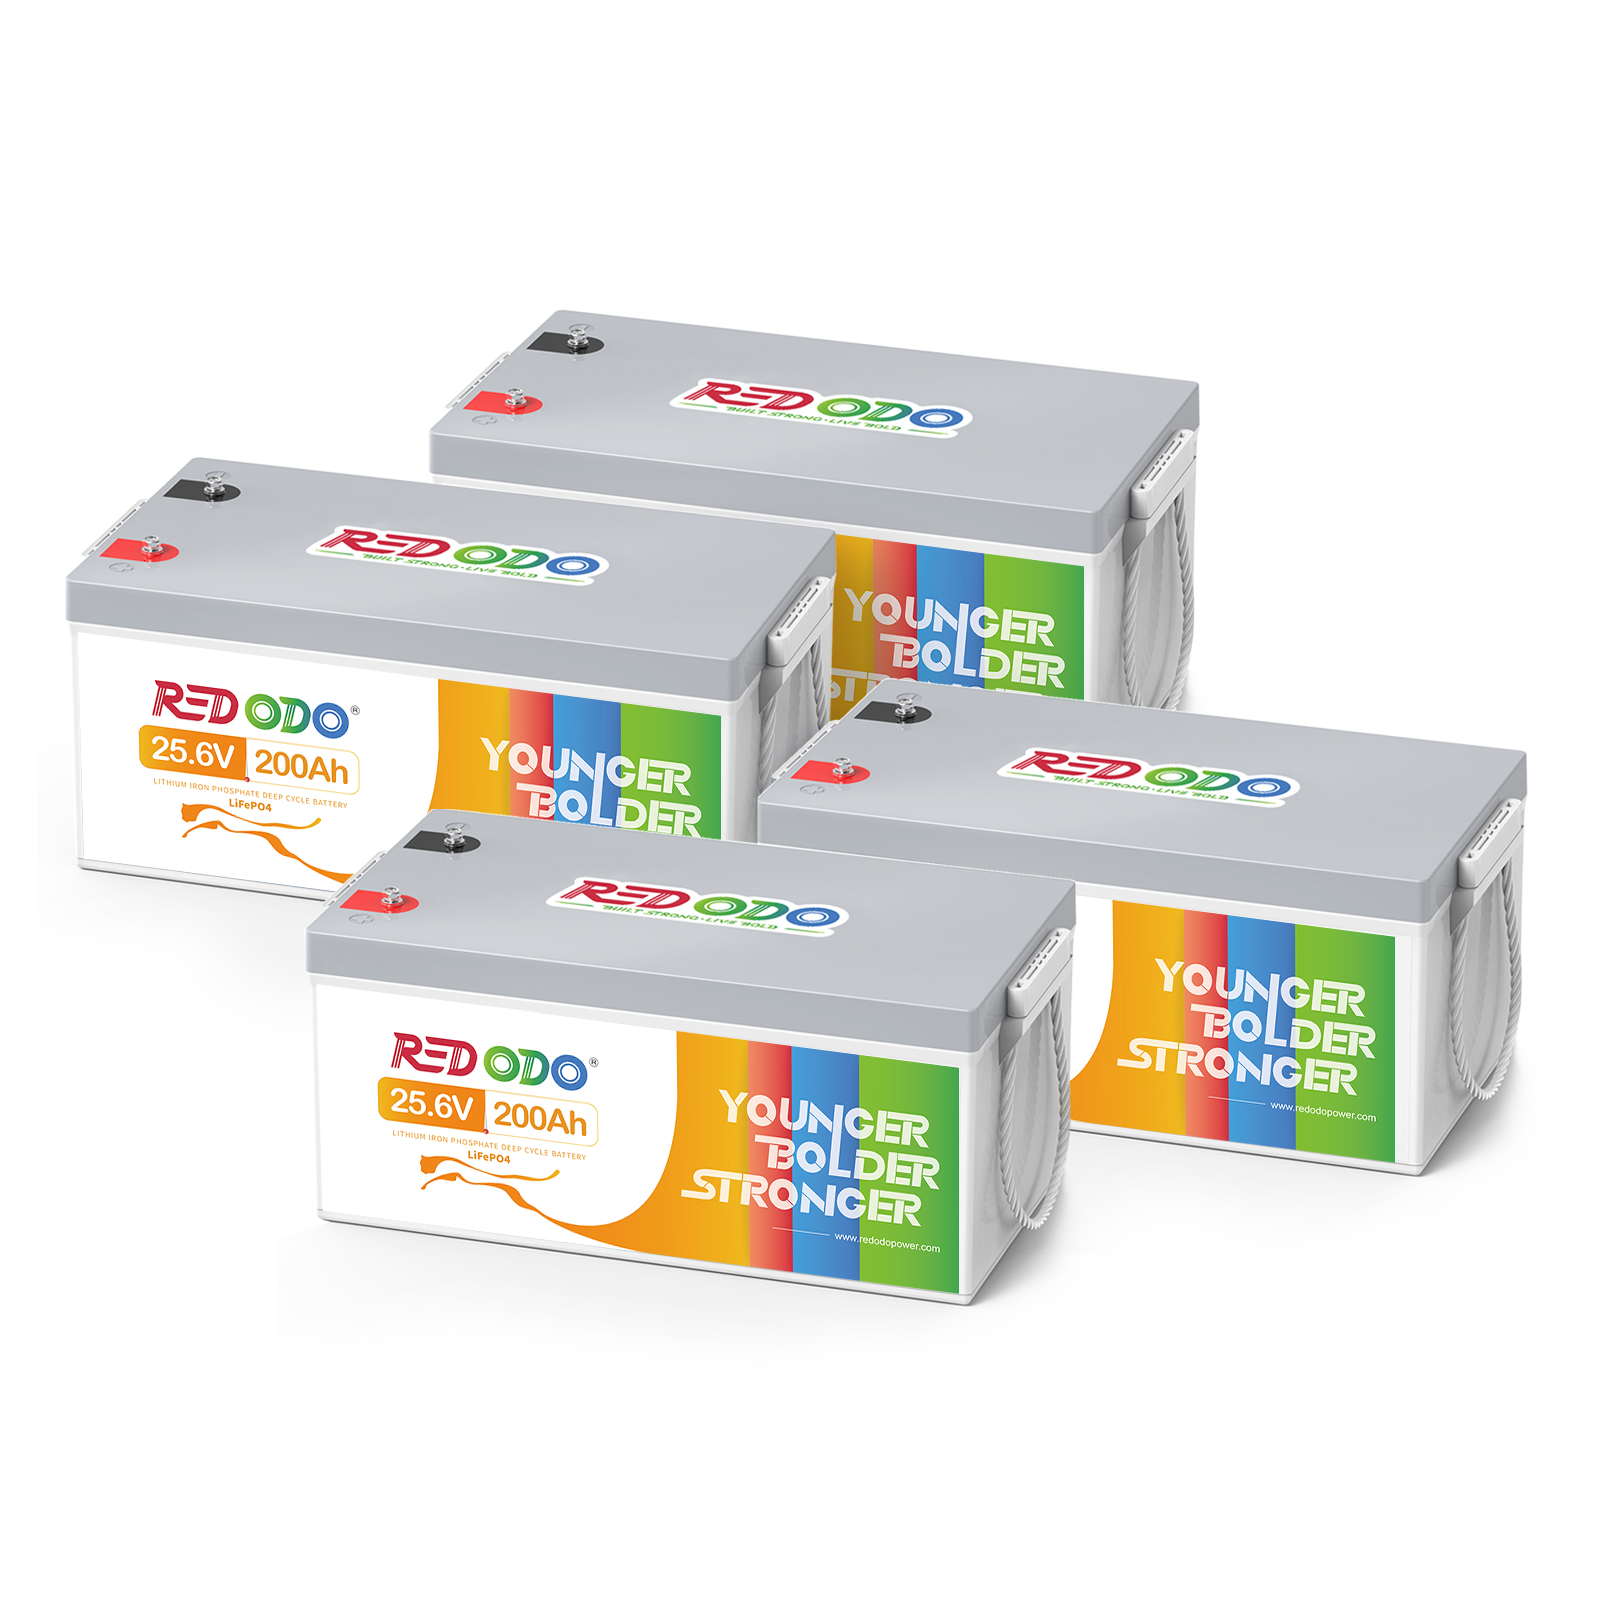 Redodo 24V 200Ah LiFePO4 Batterie | 5,12kWh & 5,12kW